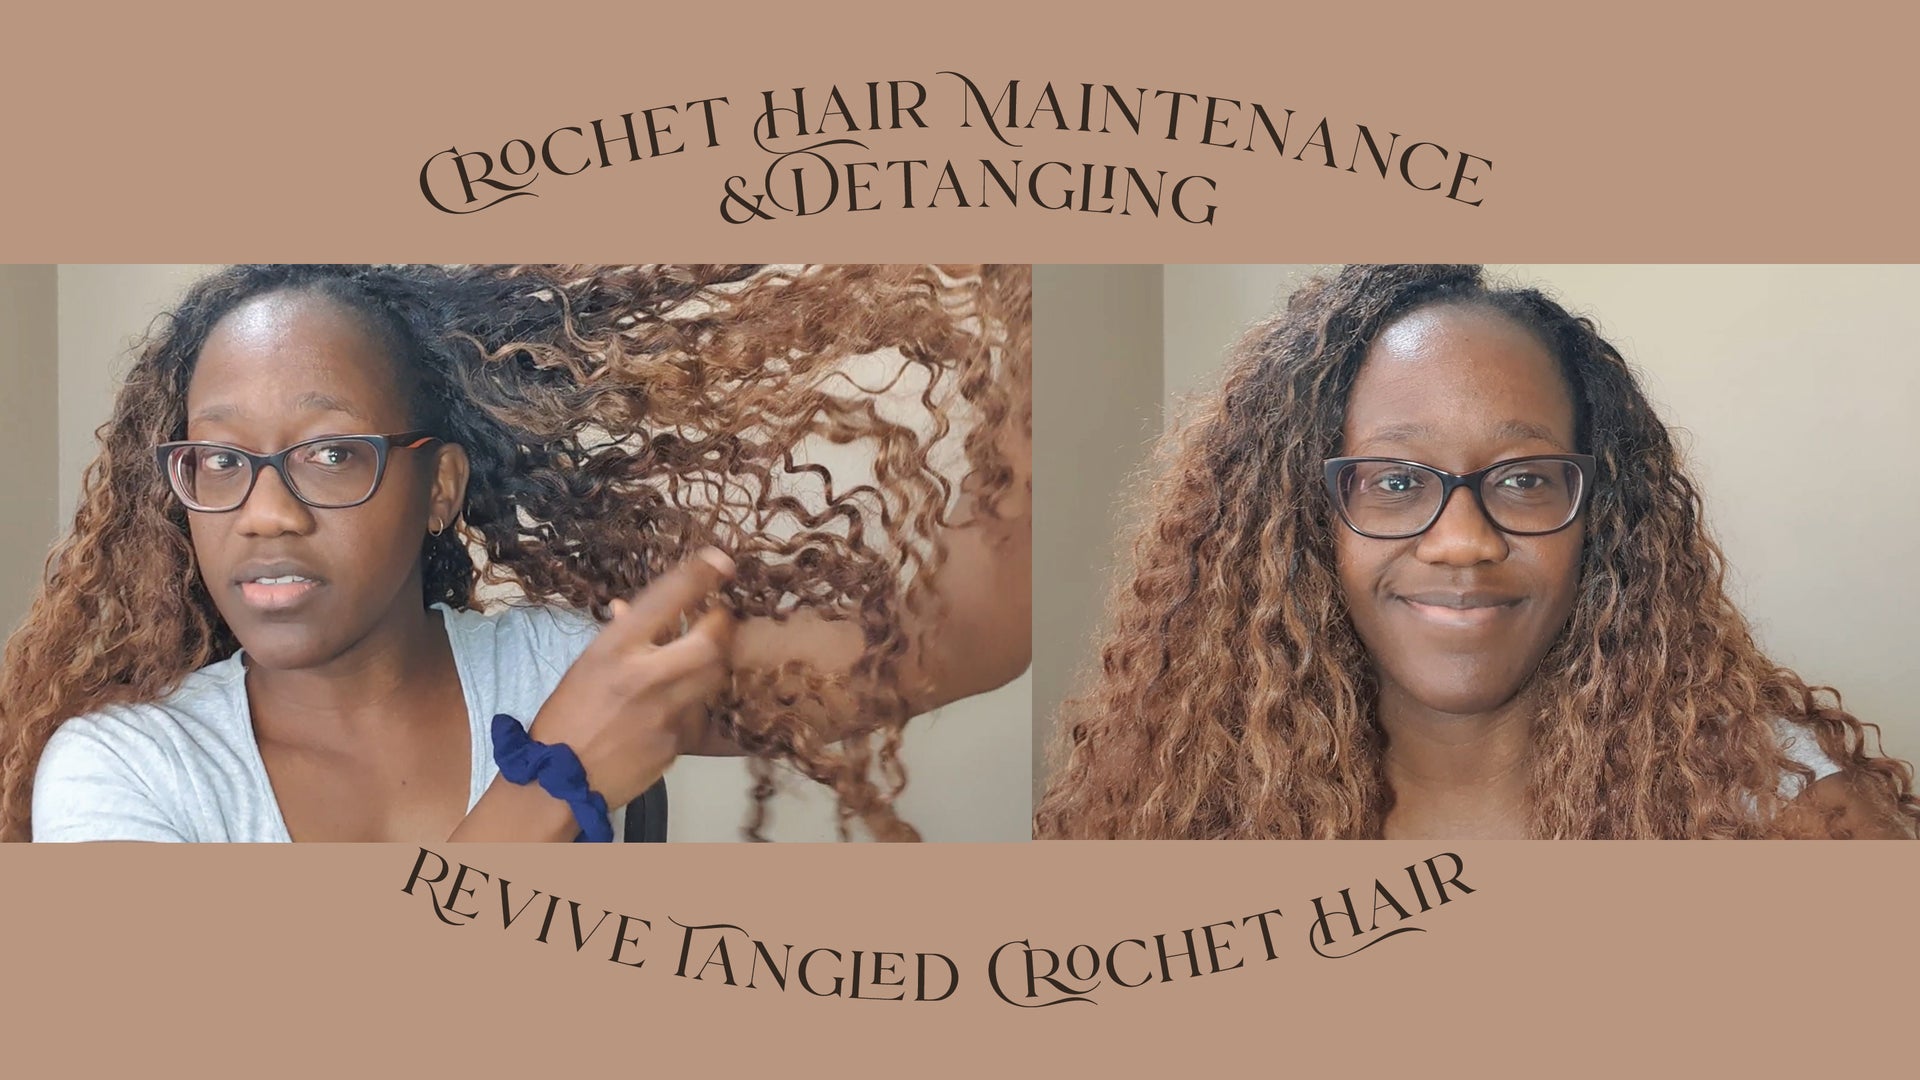 Crochet Hair Detangling and Maintenance – The Braid & Extension Besties